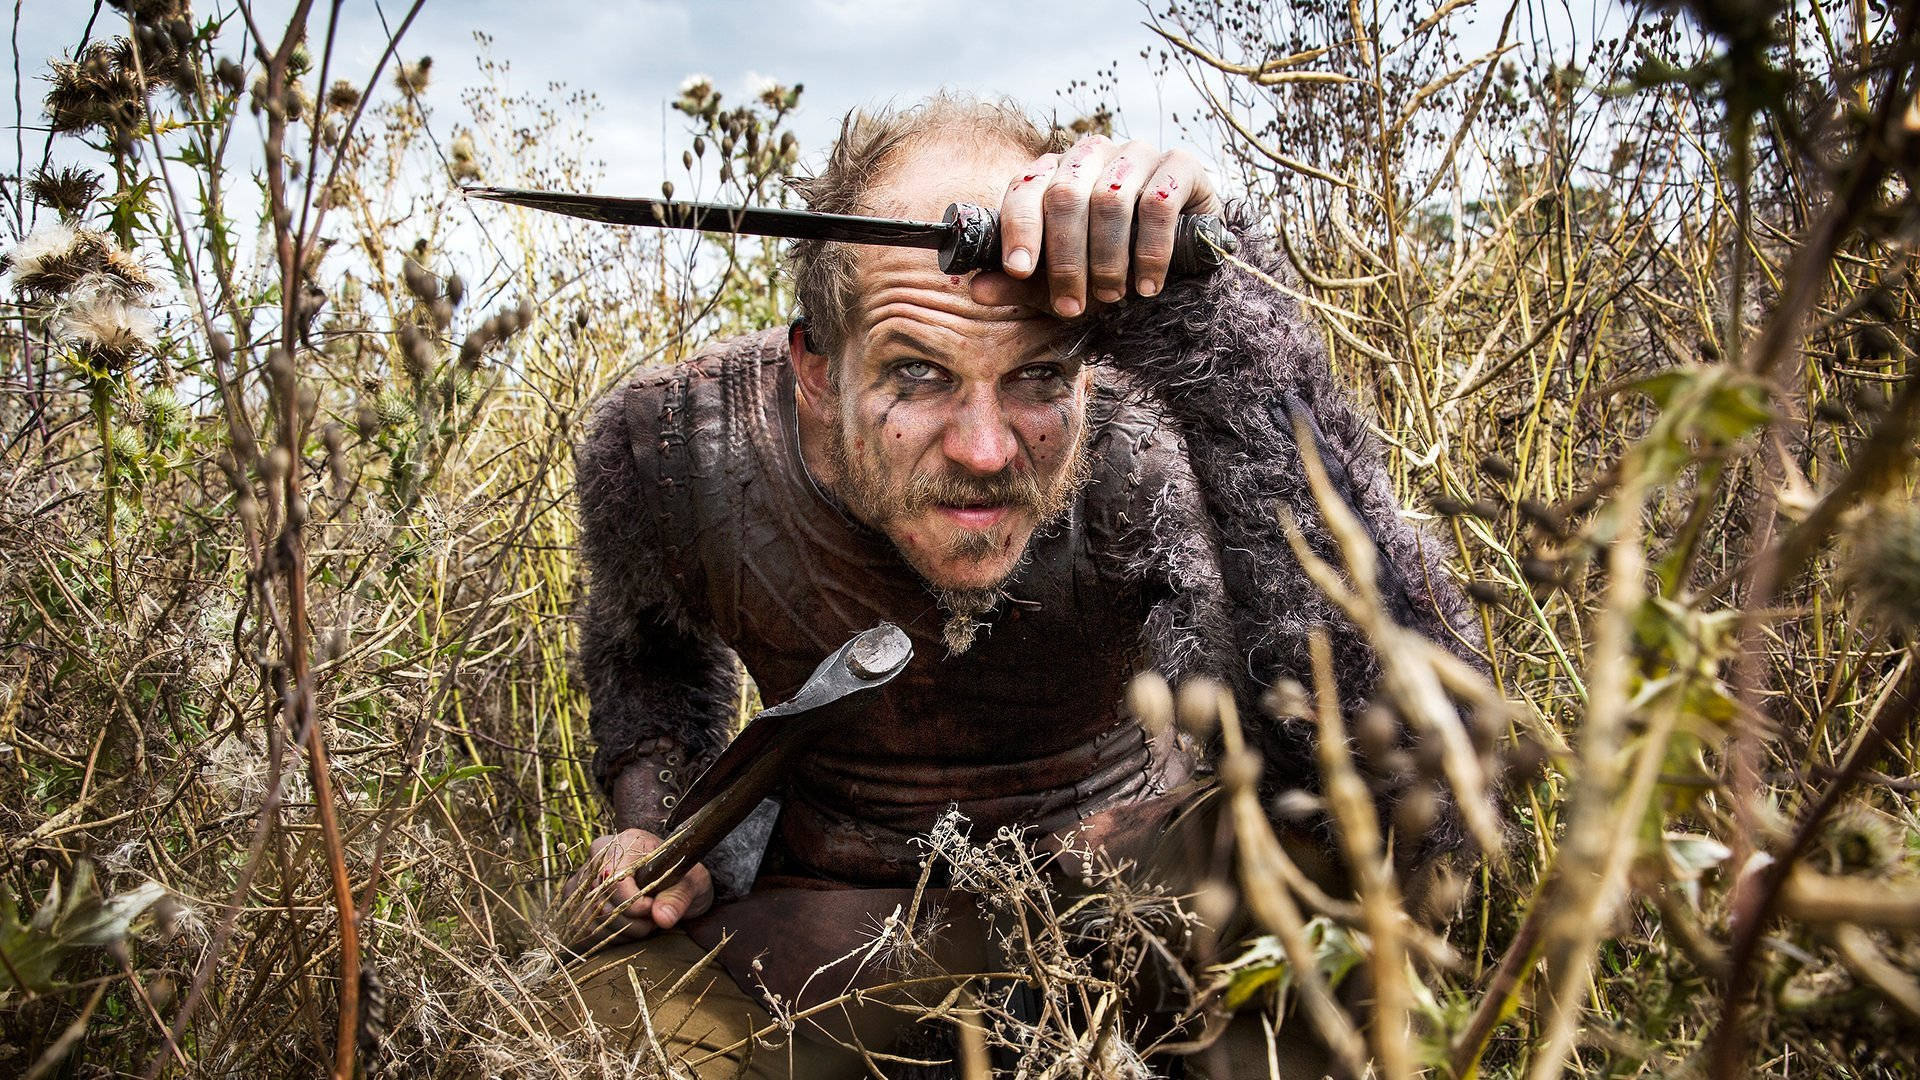 Floki From Vikings In Bushes Background